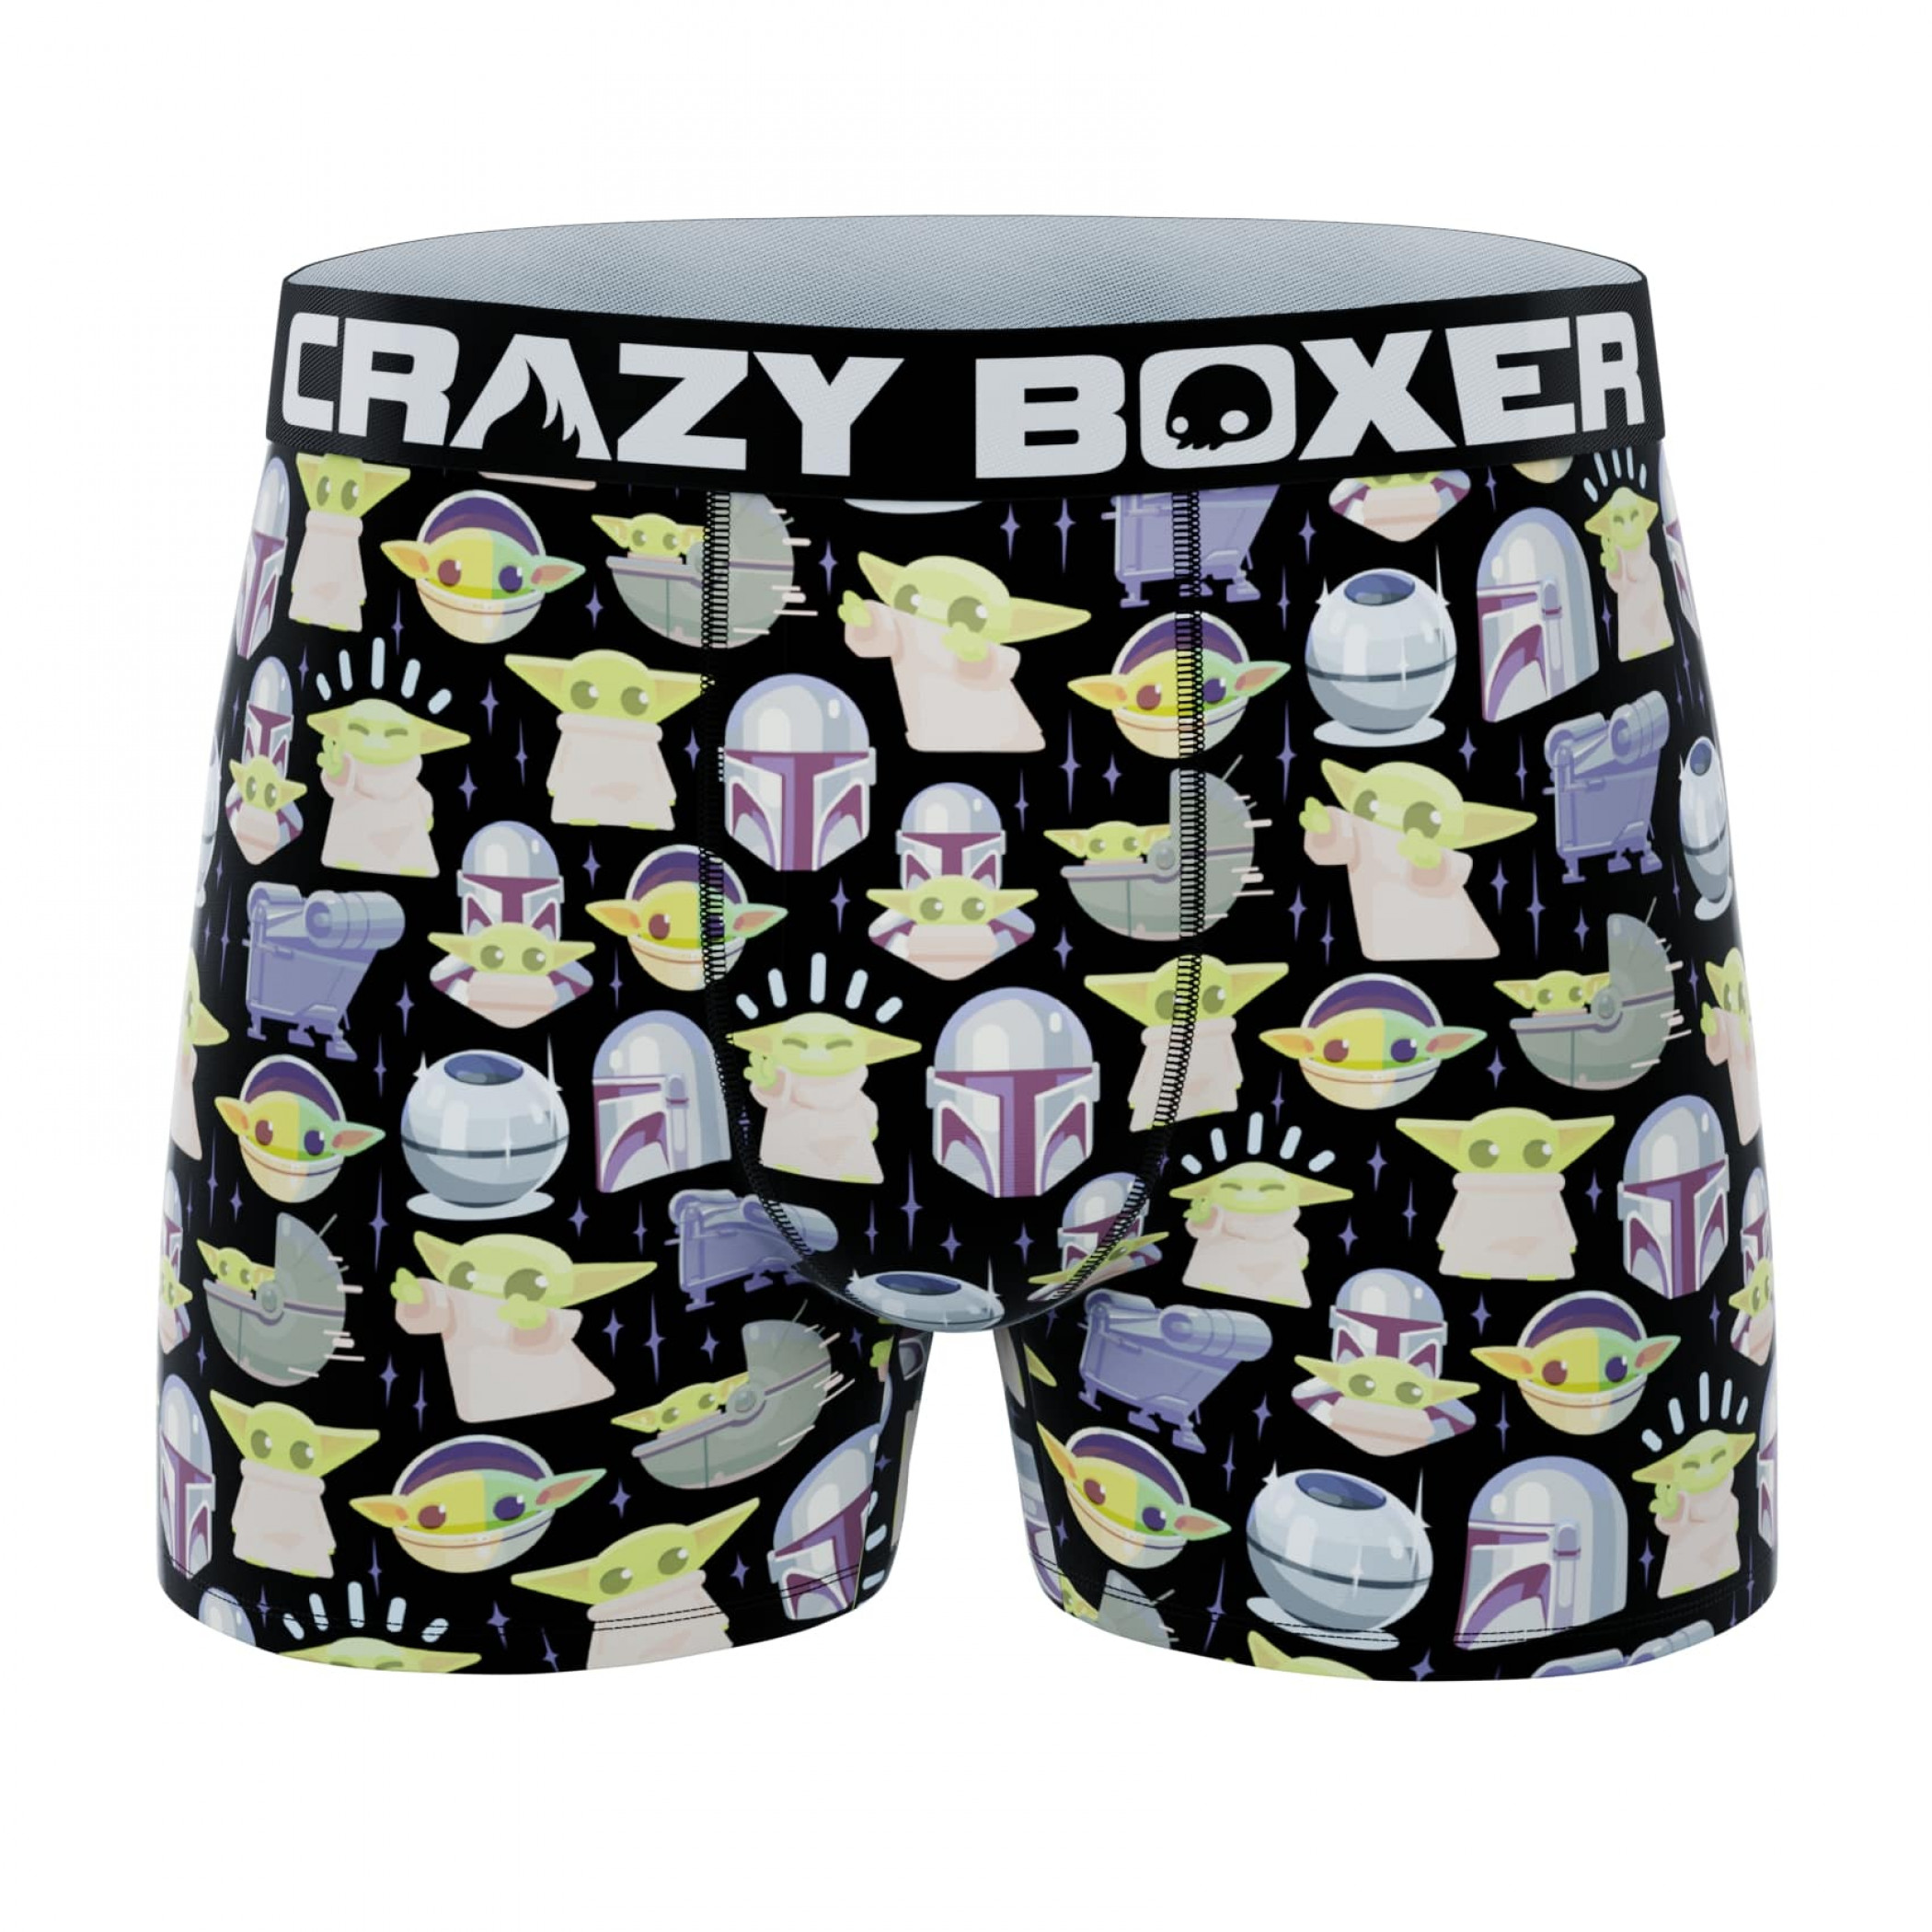 Crazy Boxer Star Wars Mando and Grogu Men's Boxer Briefs